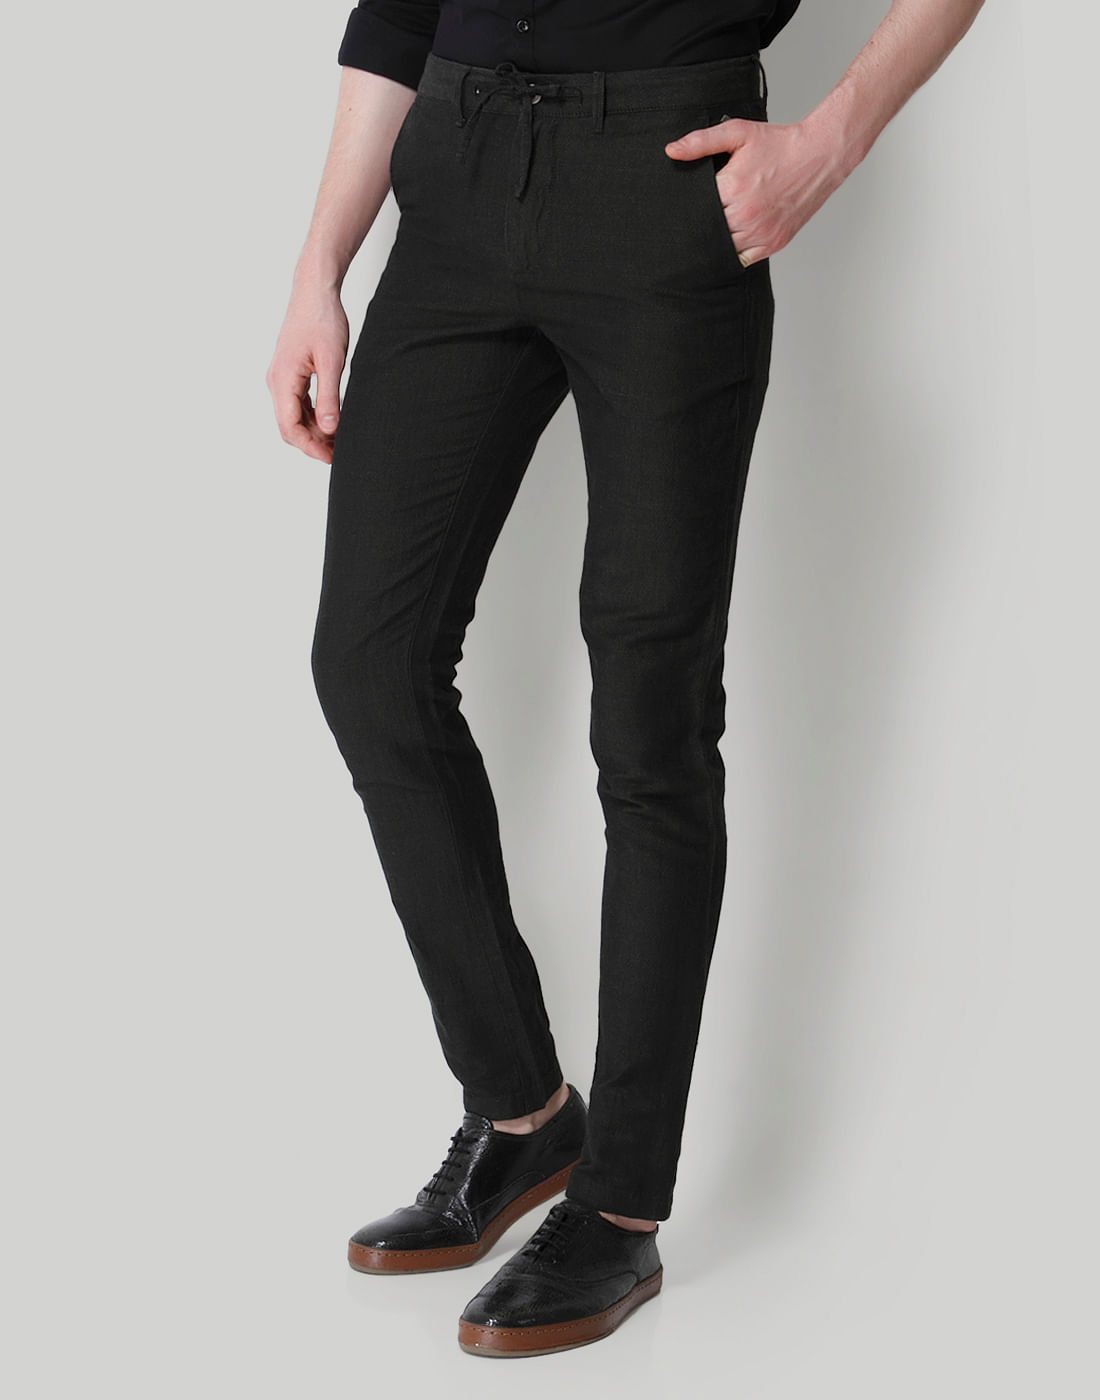 Calvin Klein Mens Slim Tonal Casual Chino Pants Black 33W x 32L   Walmartcom